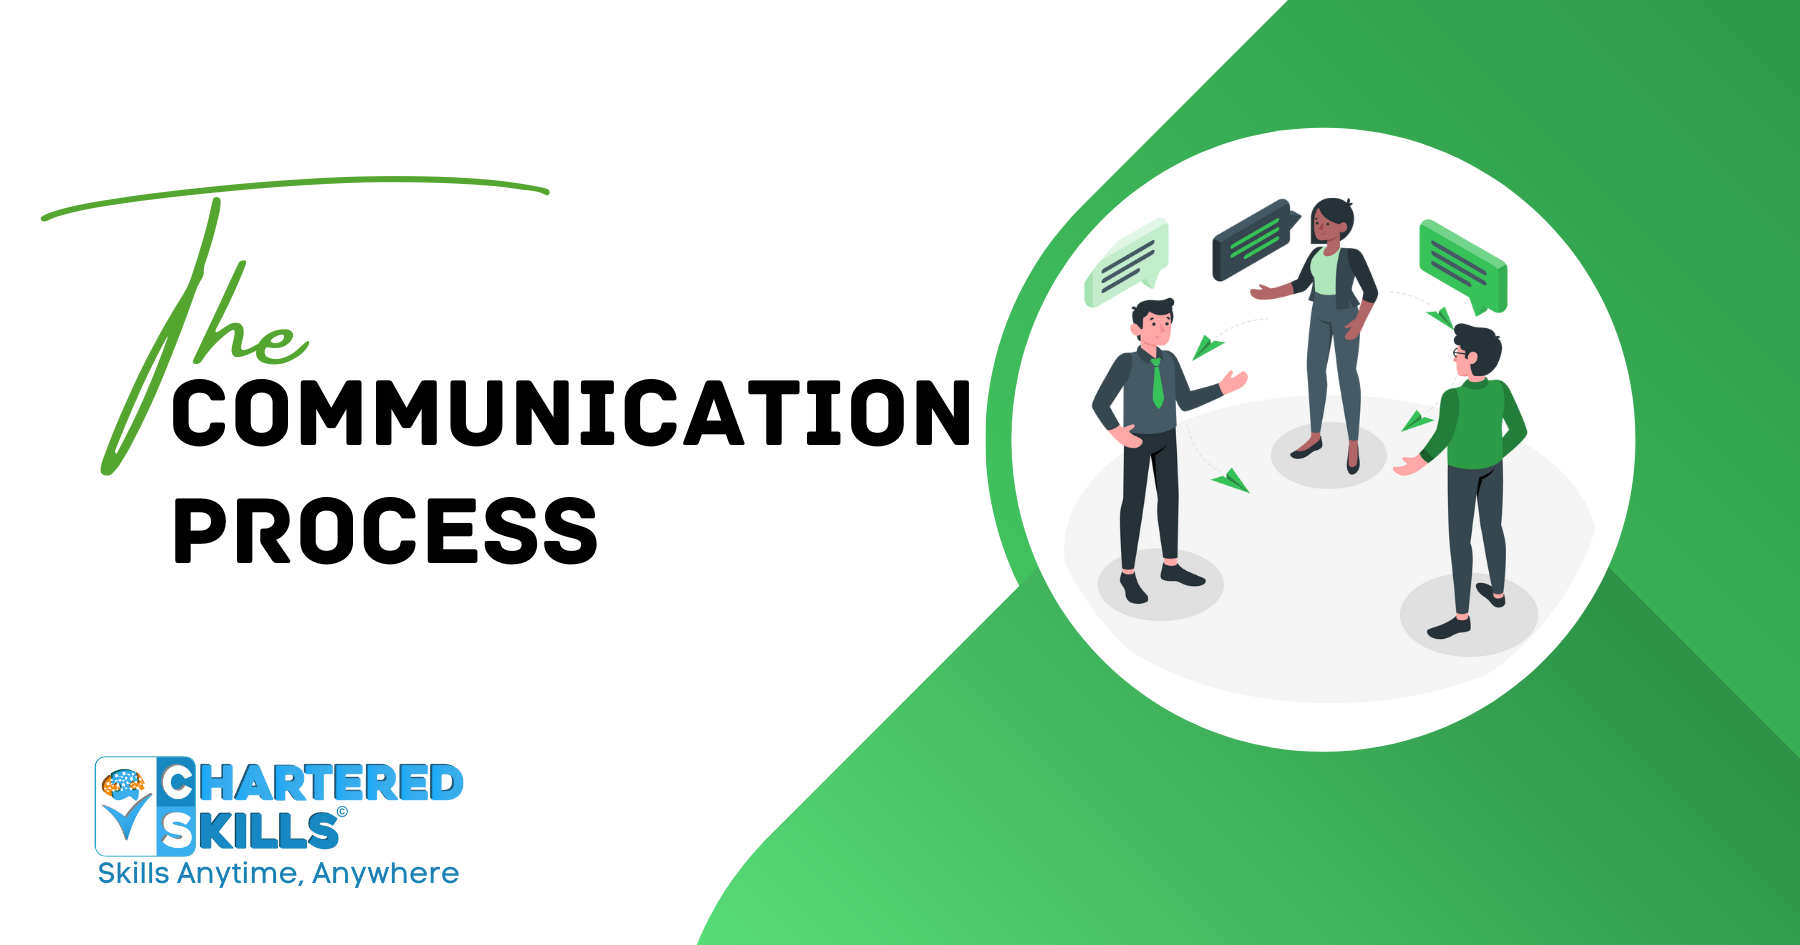 The Communication process